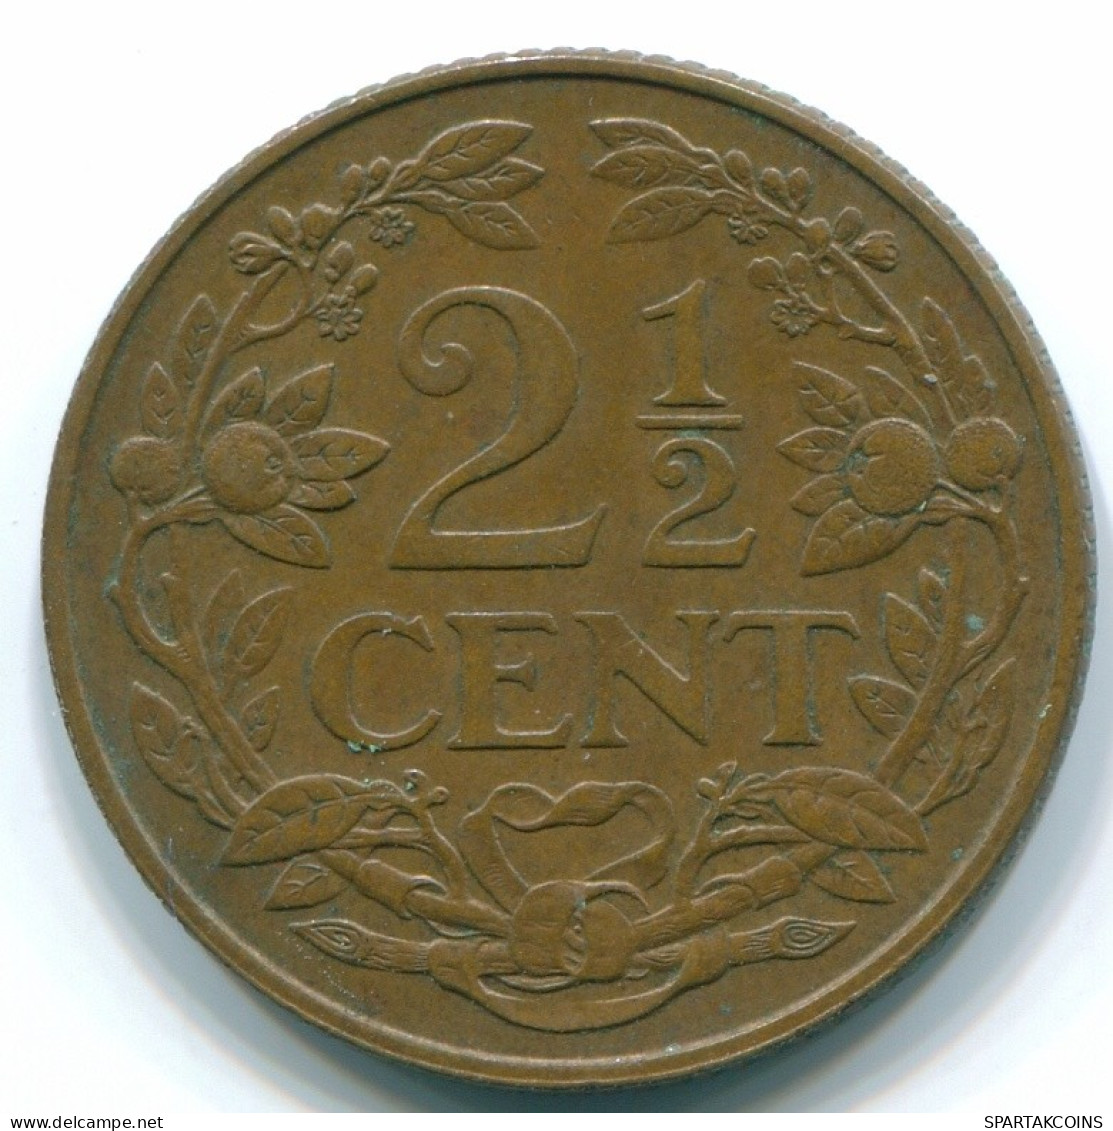 2 1/2 CENT 1965 CURACAO NÉERLANDAIS NETHERLANDS Bronze Colonial Pièce #S10237.F.A - Curaçao